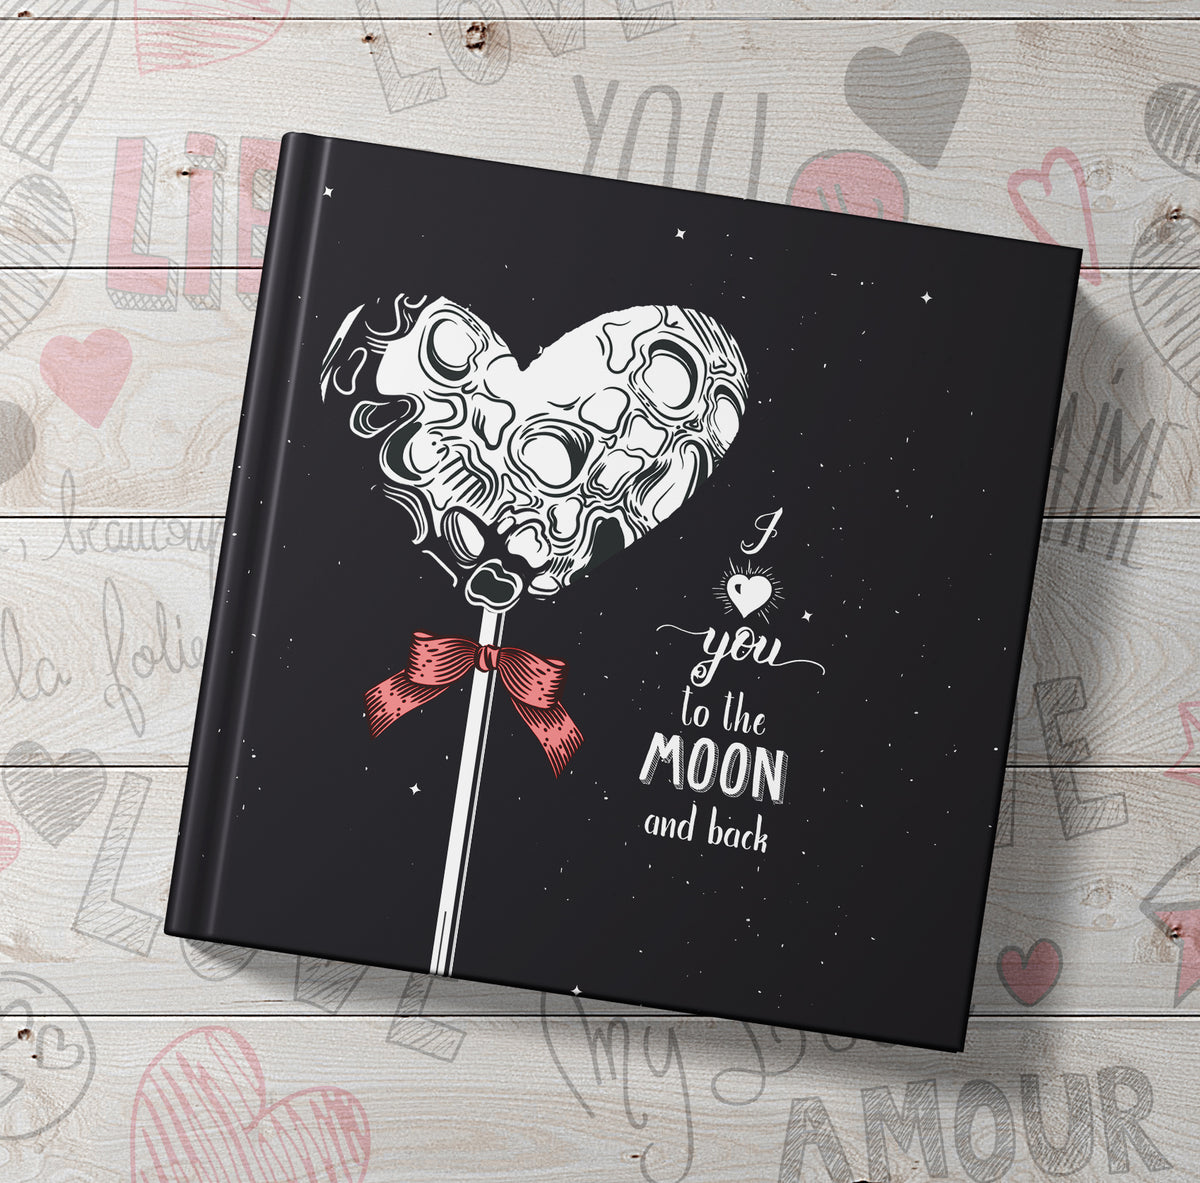 I love you Gift Couples Gift Book (Hardcover) – Monsoon Publishing USA